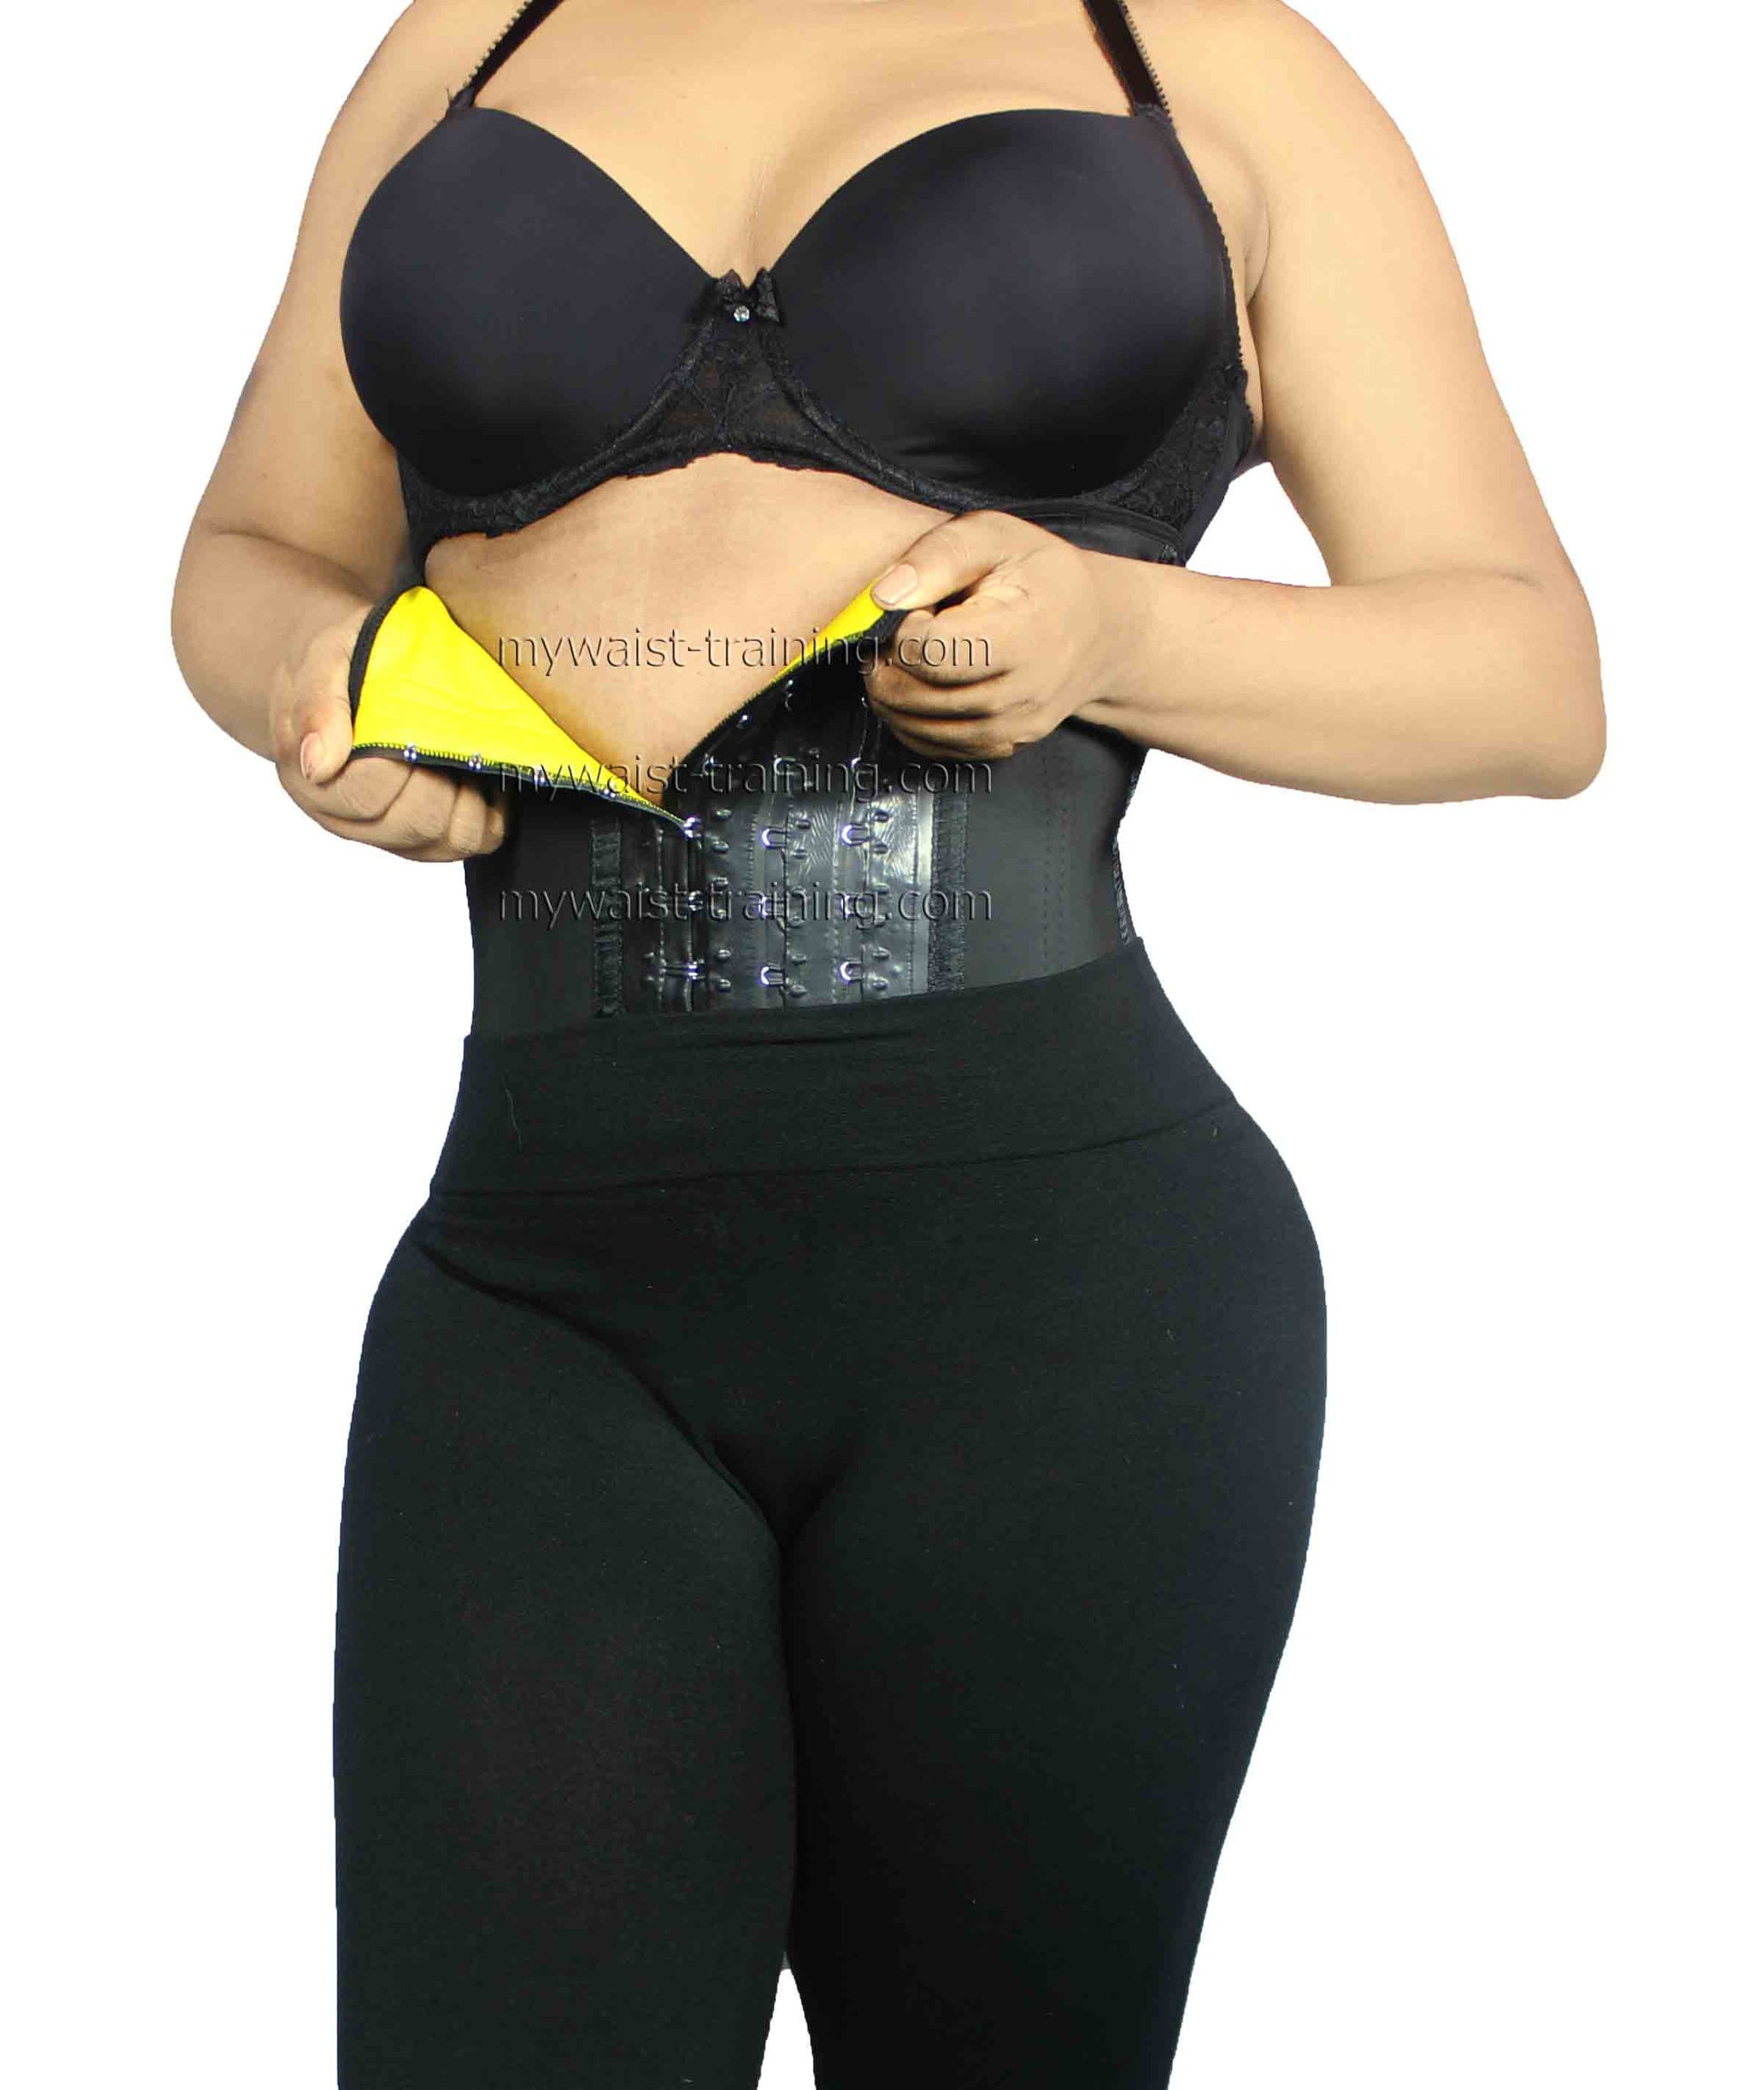 Gaine corset minceur waist trainer heat - MWT® Gaine minceur